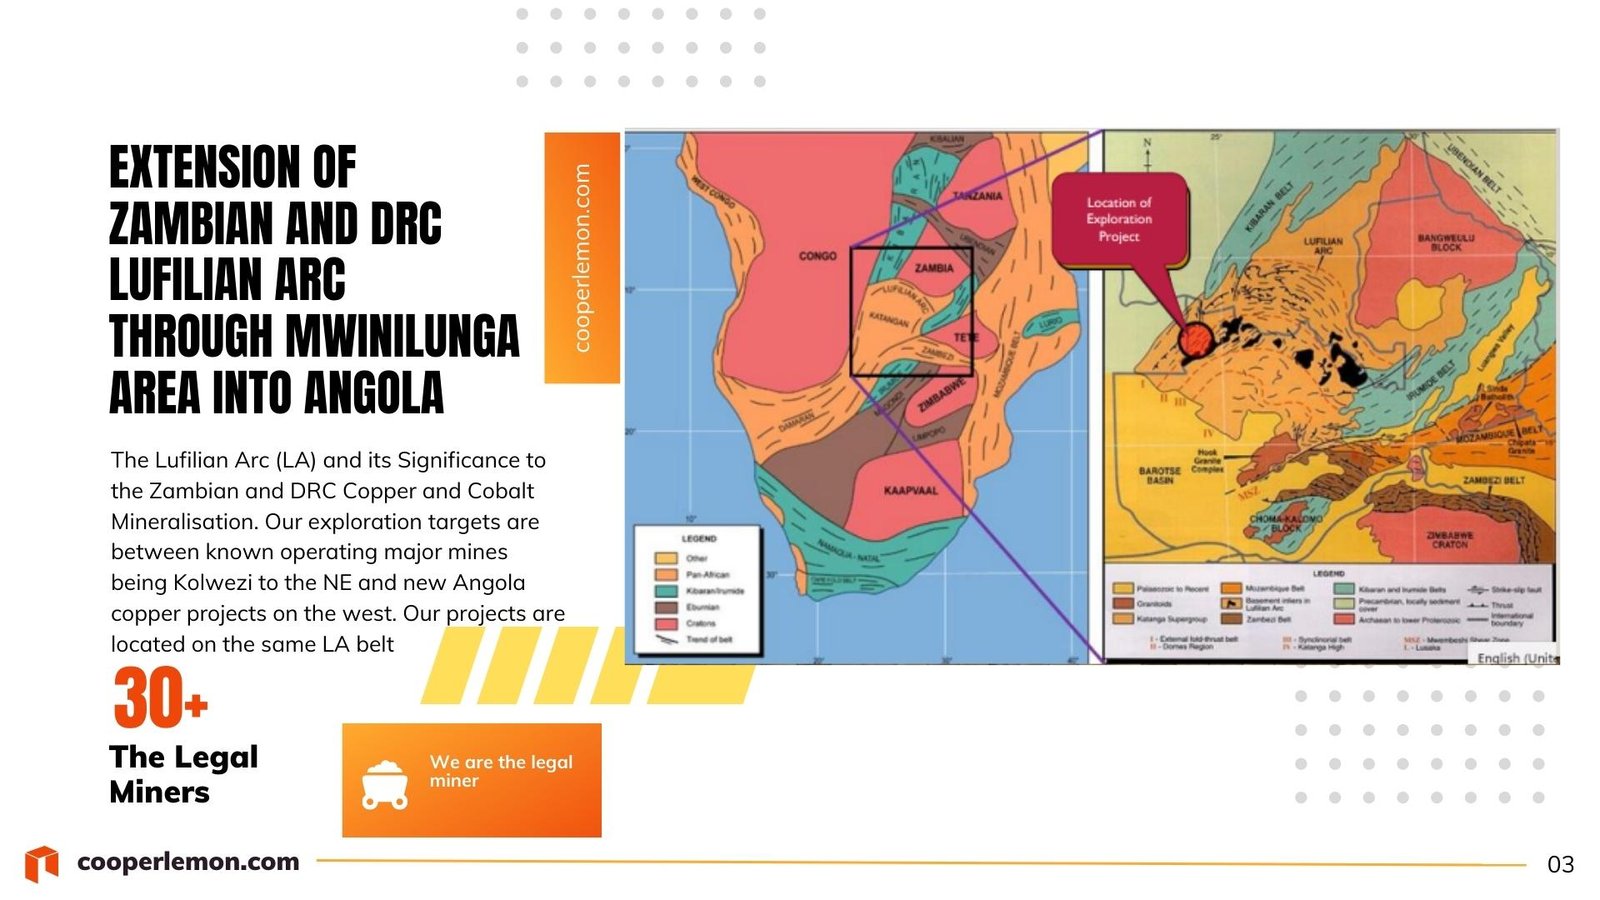 Extension of Zambian and DRC Lufilian Arc Through Mwinilunga Area into Angola